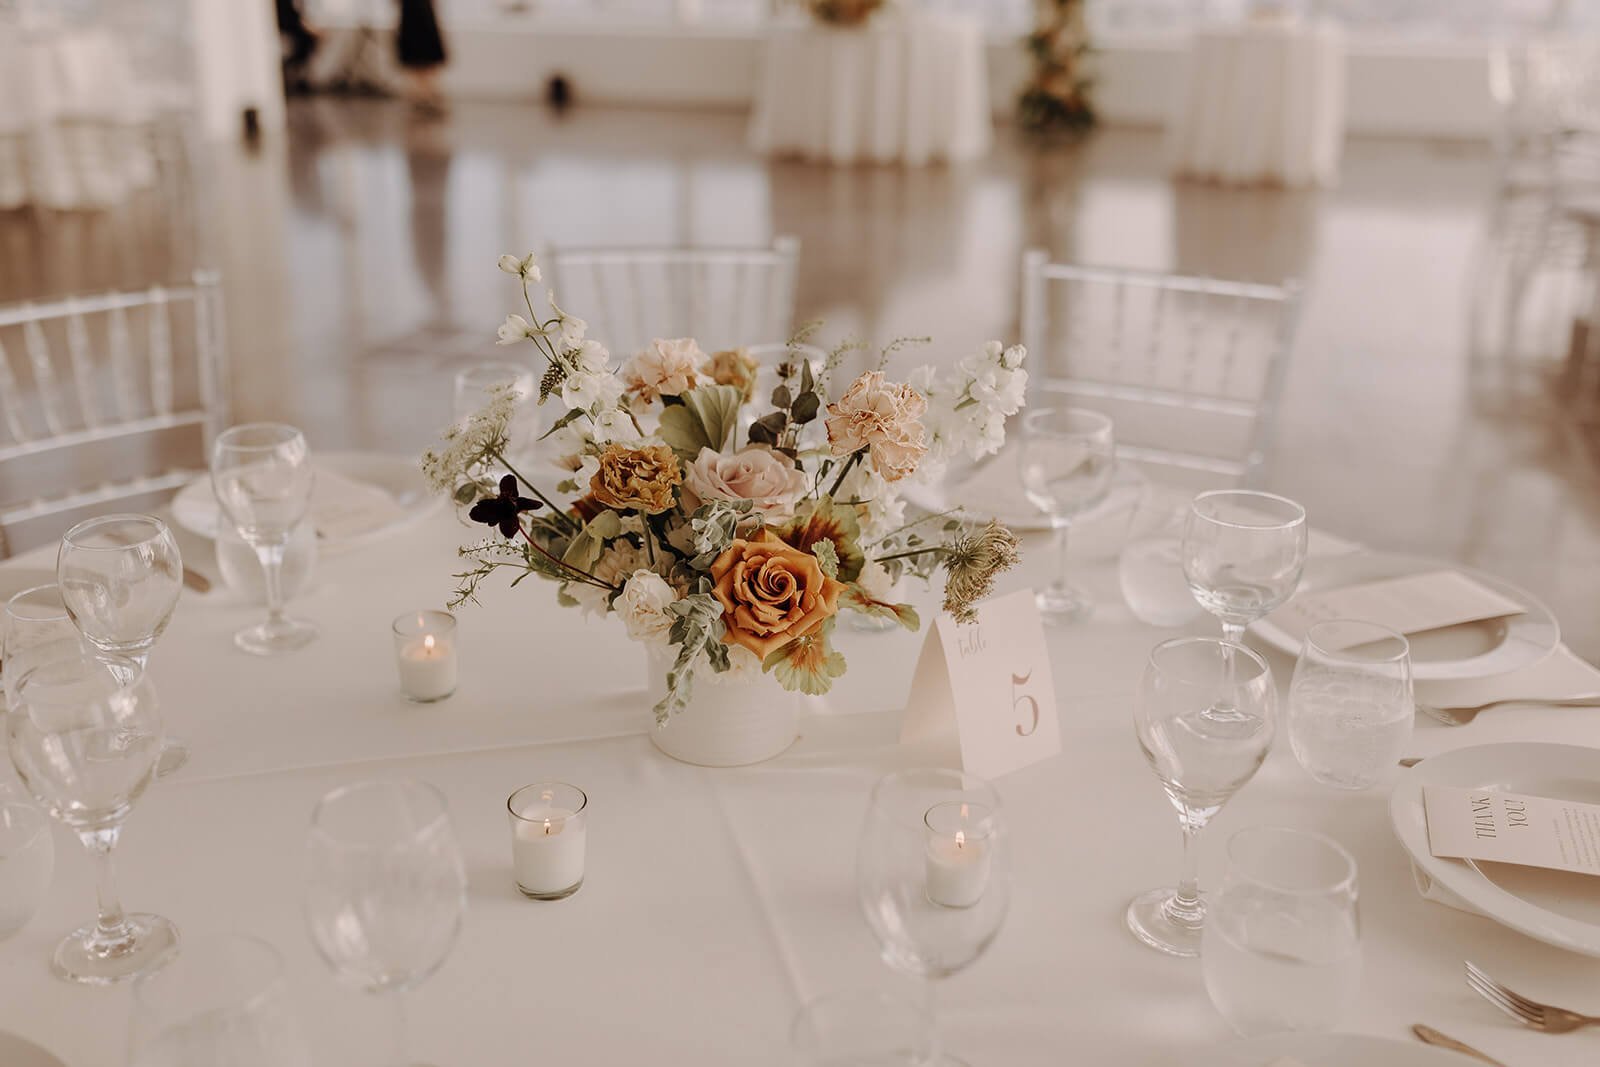 Wedding reception table decorations